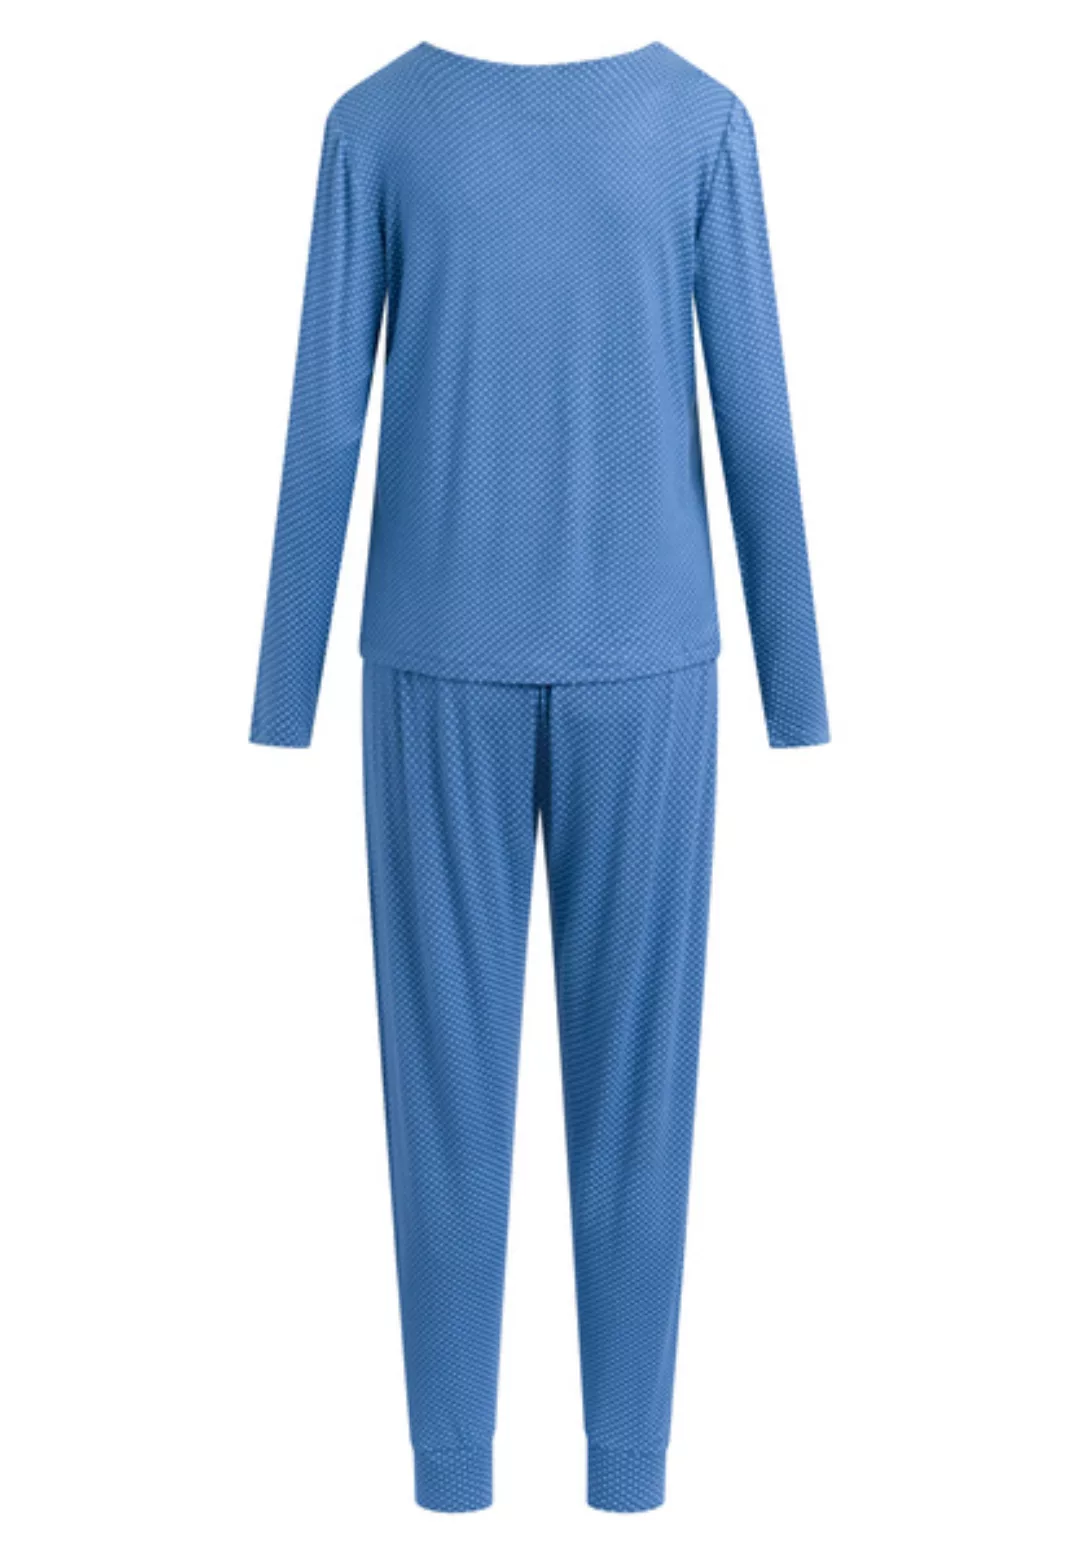 Pyjama Set, Lange Hose Und Longsleeve "Jordan L/s" True Navy Aop günstig online kaufen